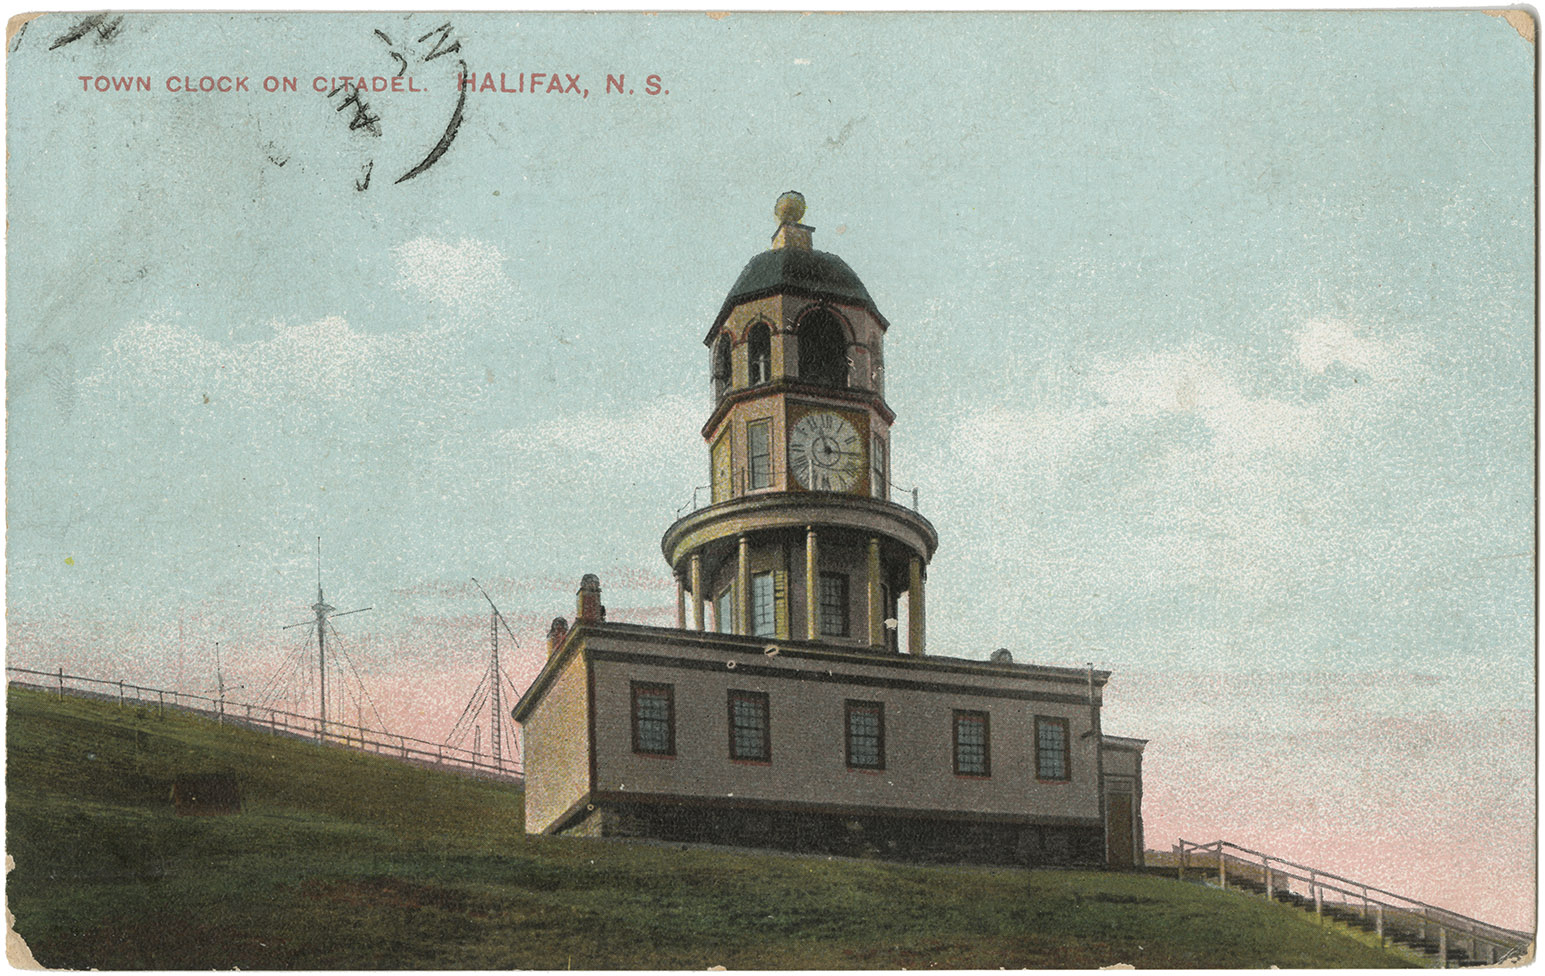 communityalbums - Town Clock on Citadel, Halifax, N.S.